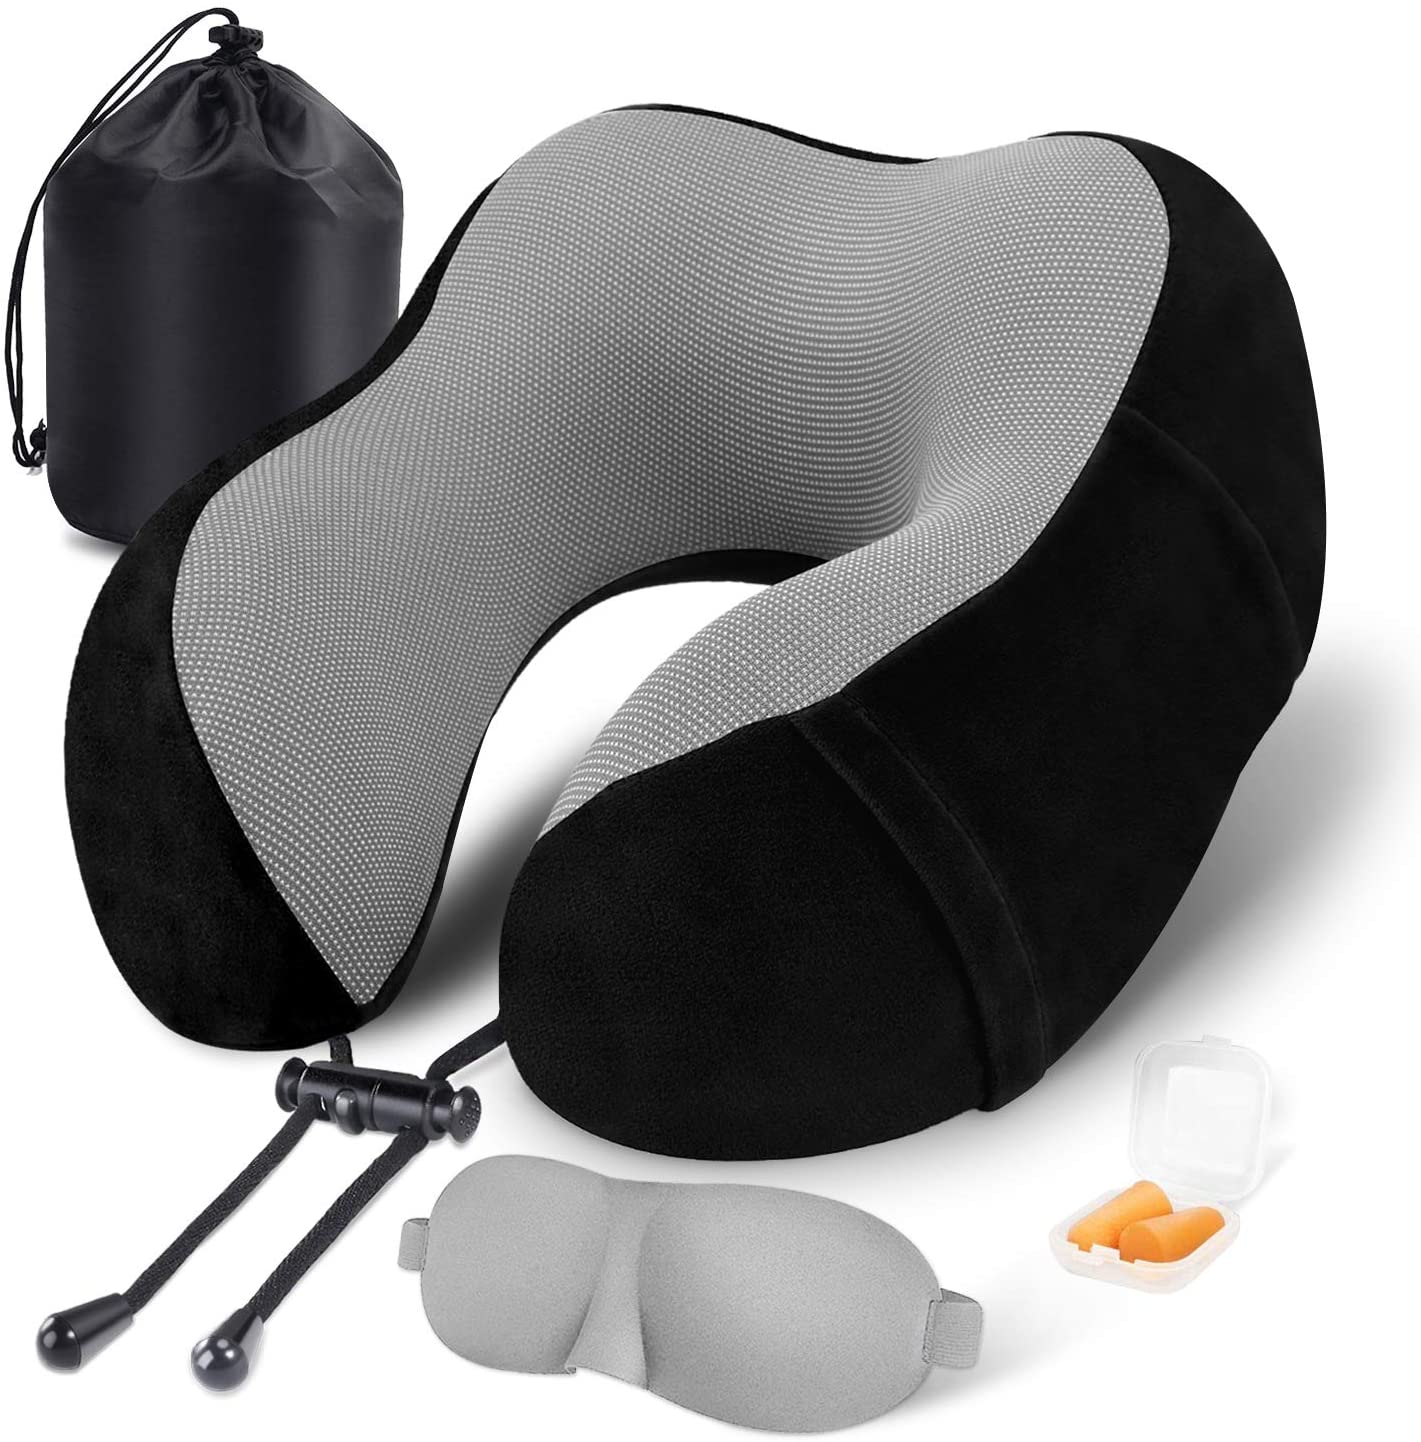 Useful travel gifts - MLVOC Travel Pillow 100% Pure Memory Foam Neck Pillow